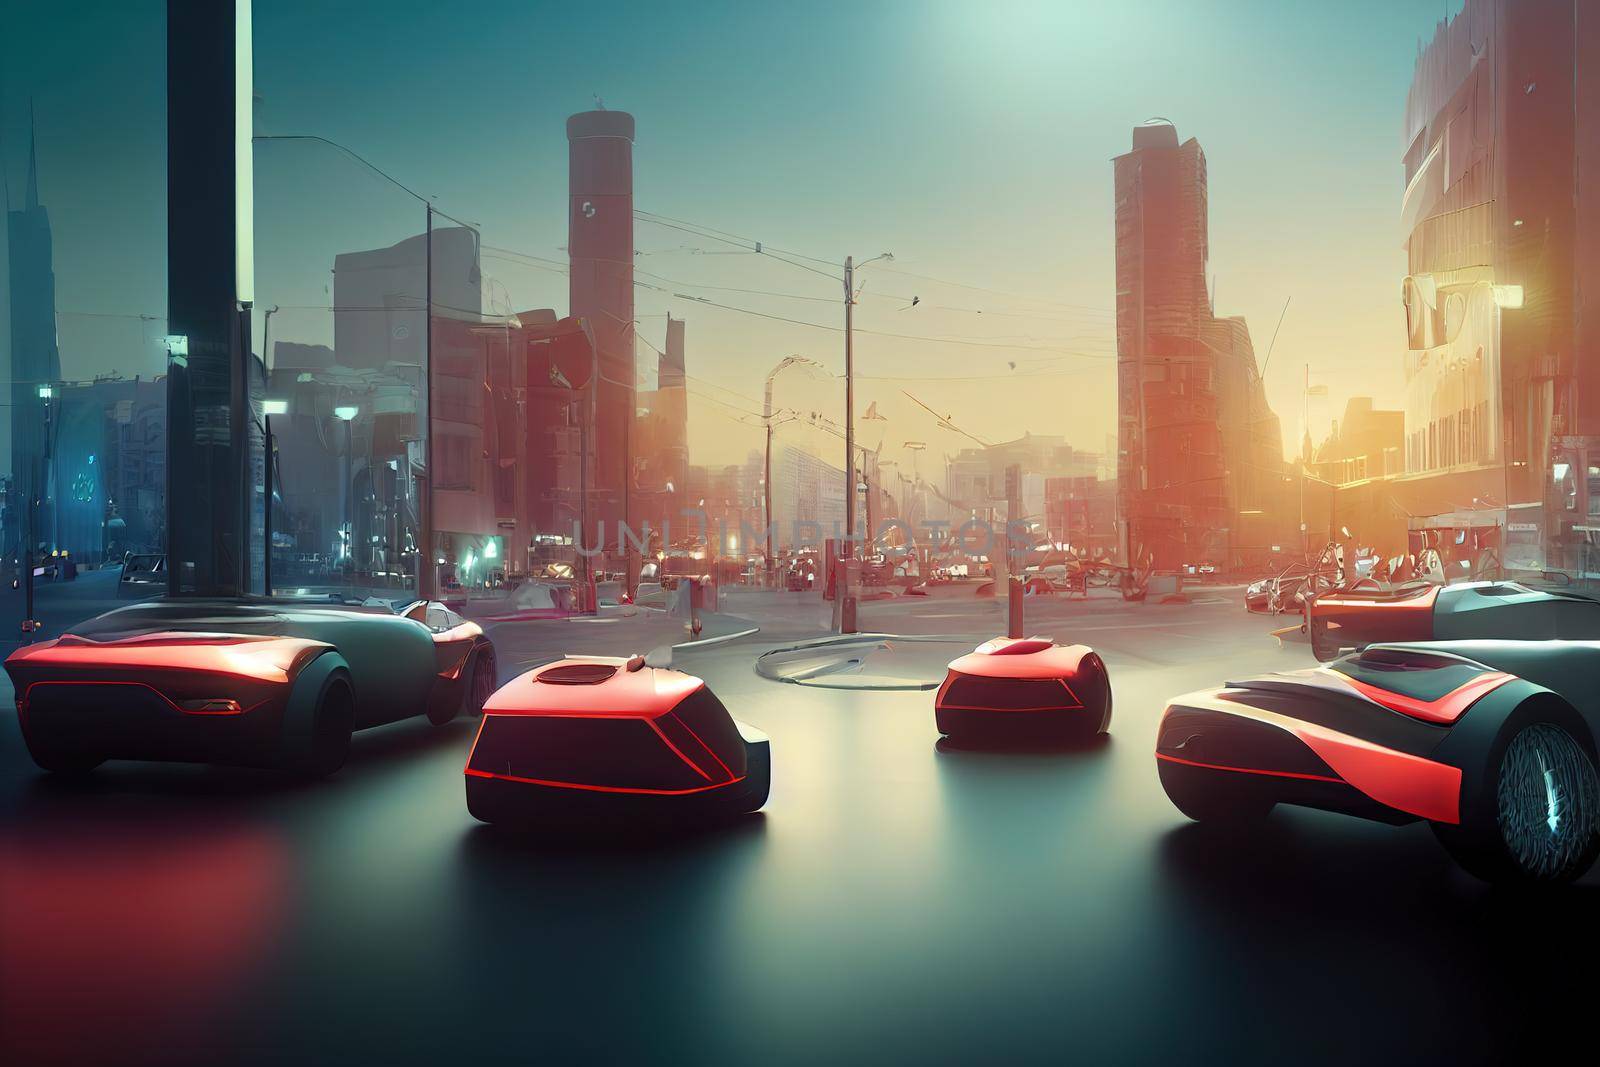 red futuristic delivery cars in future city by 2ragon